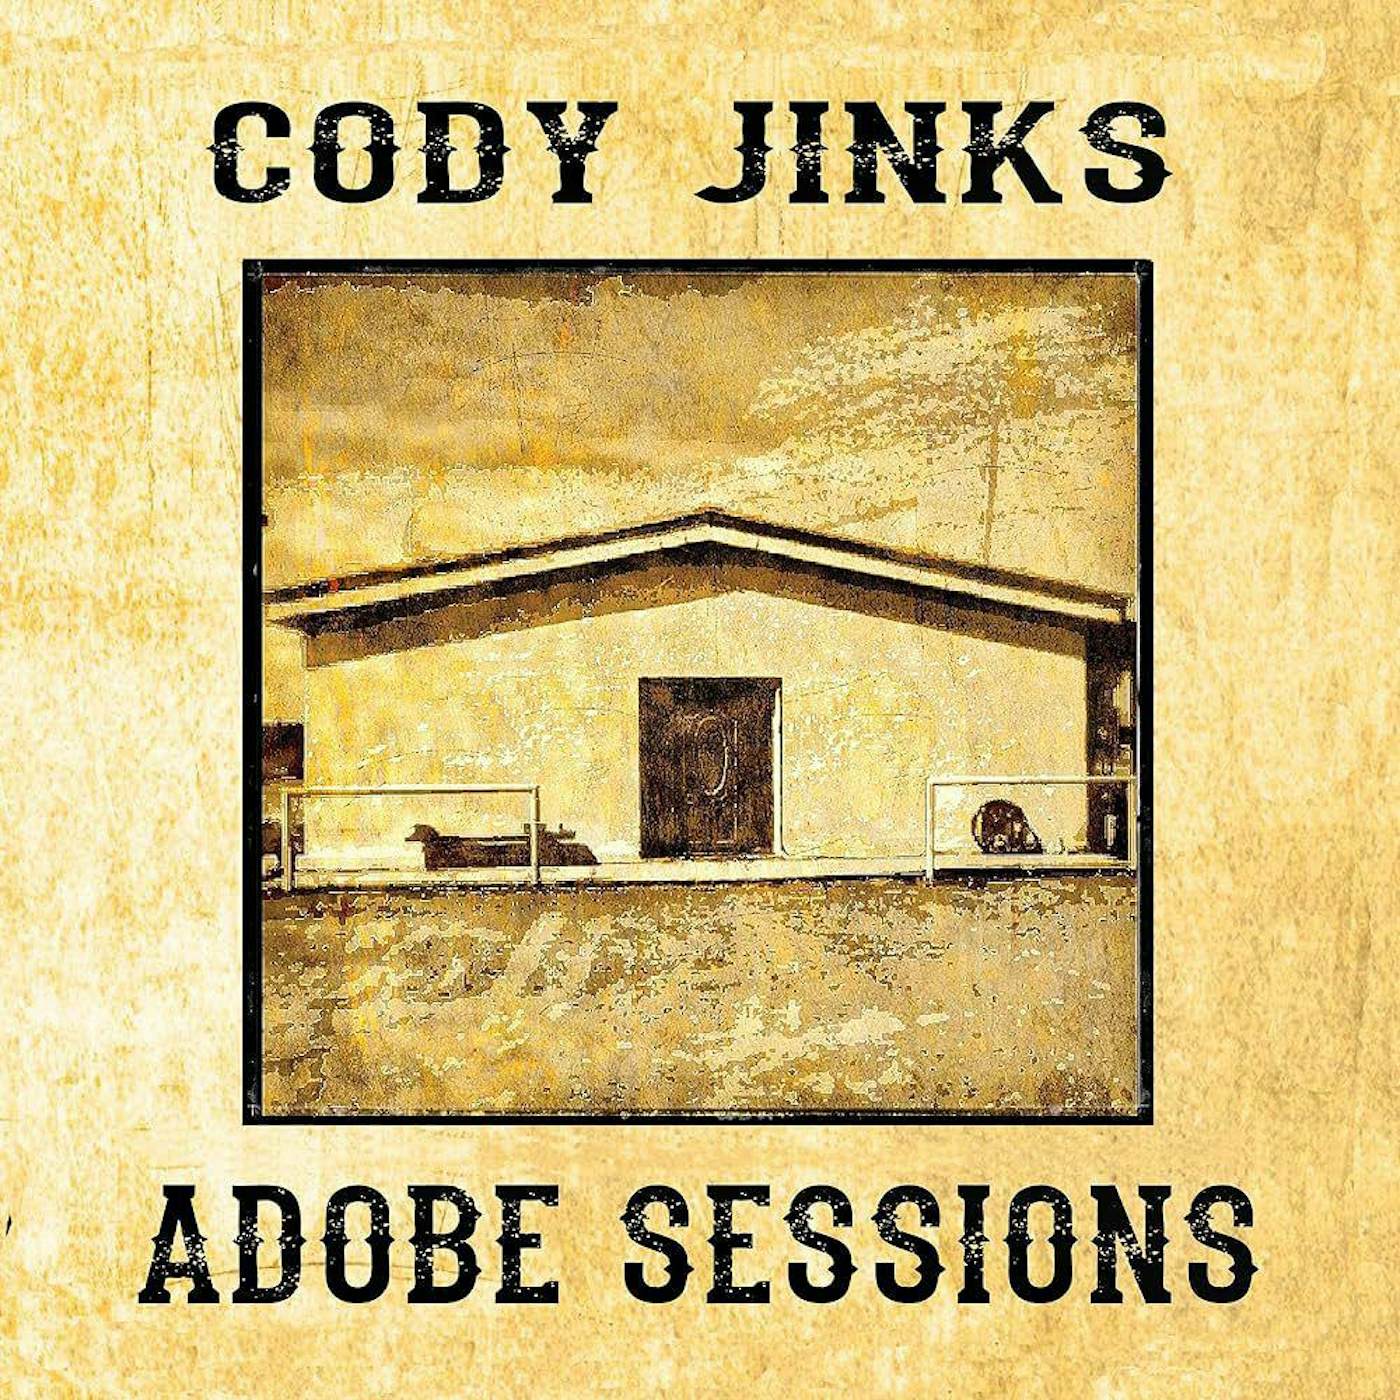 Cody Jinks Adobe Sessions (2LP/Gold) Vinyl Record